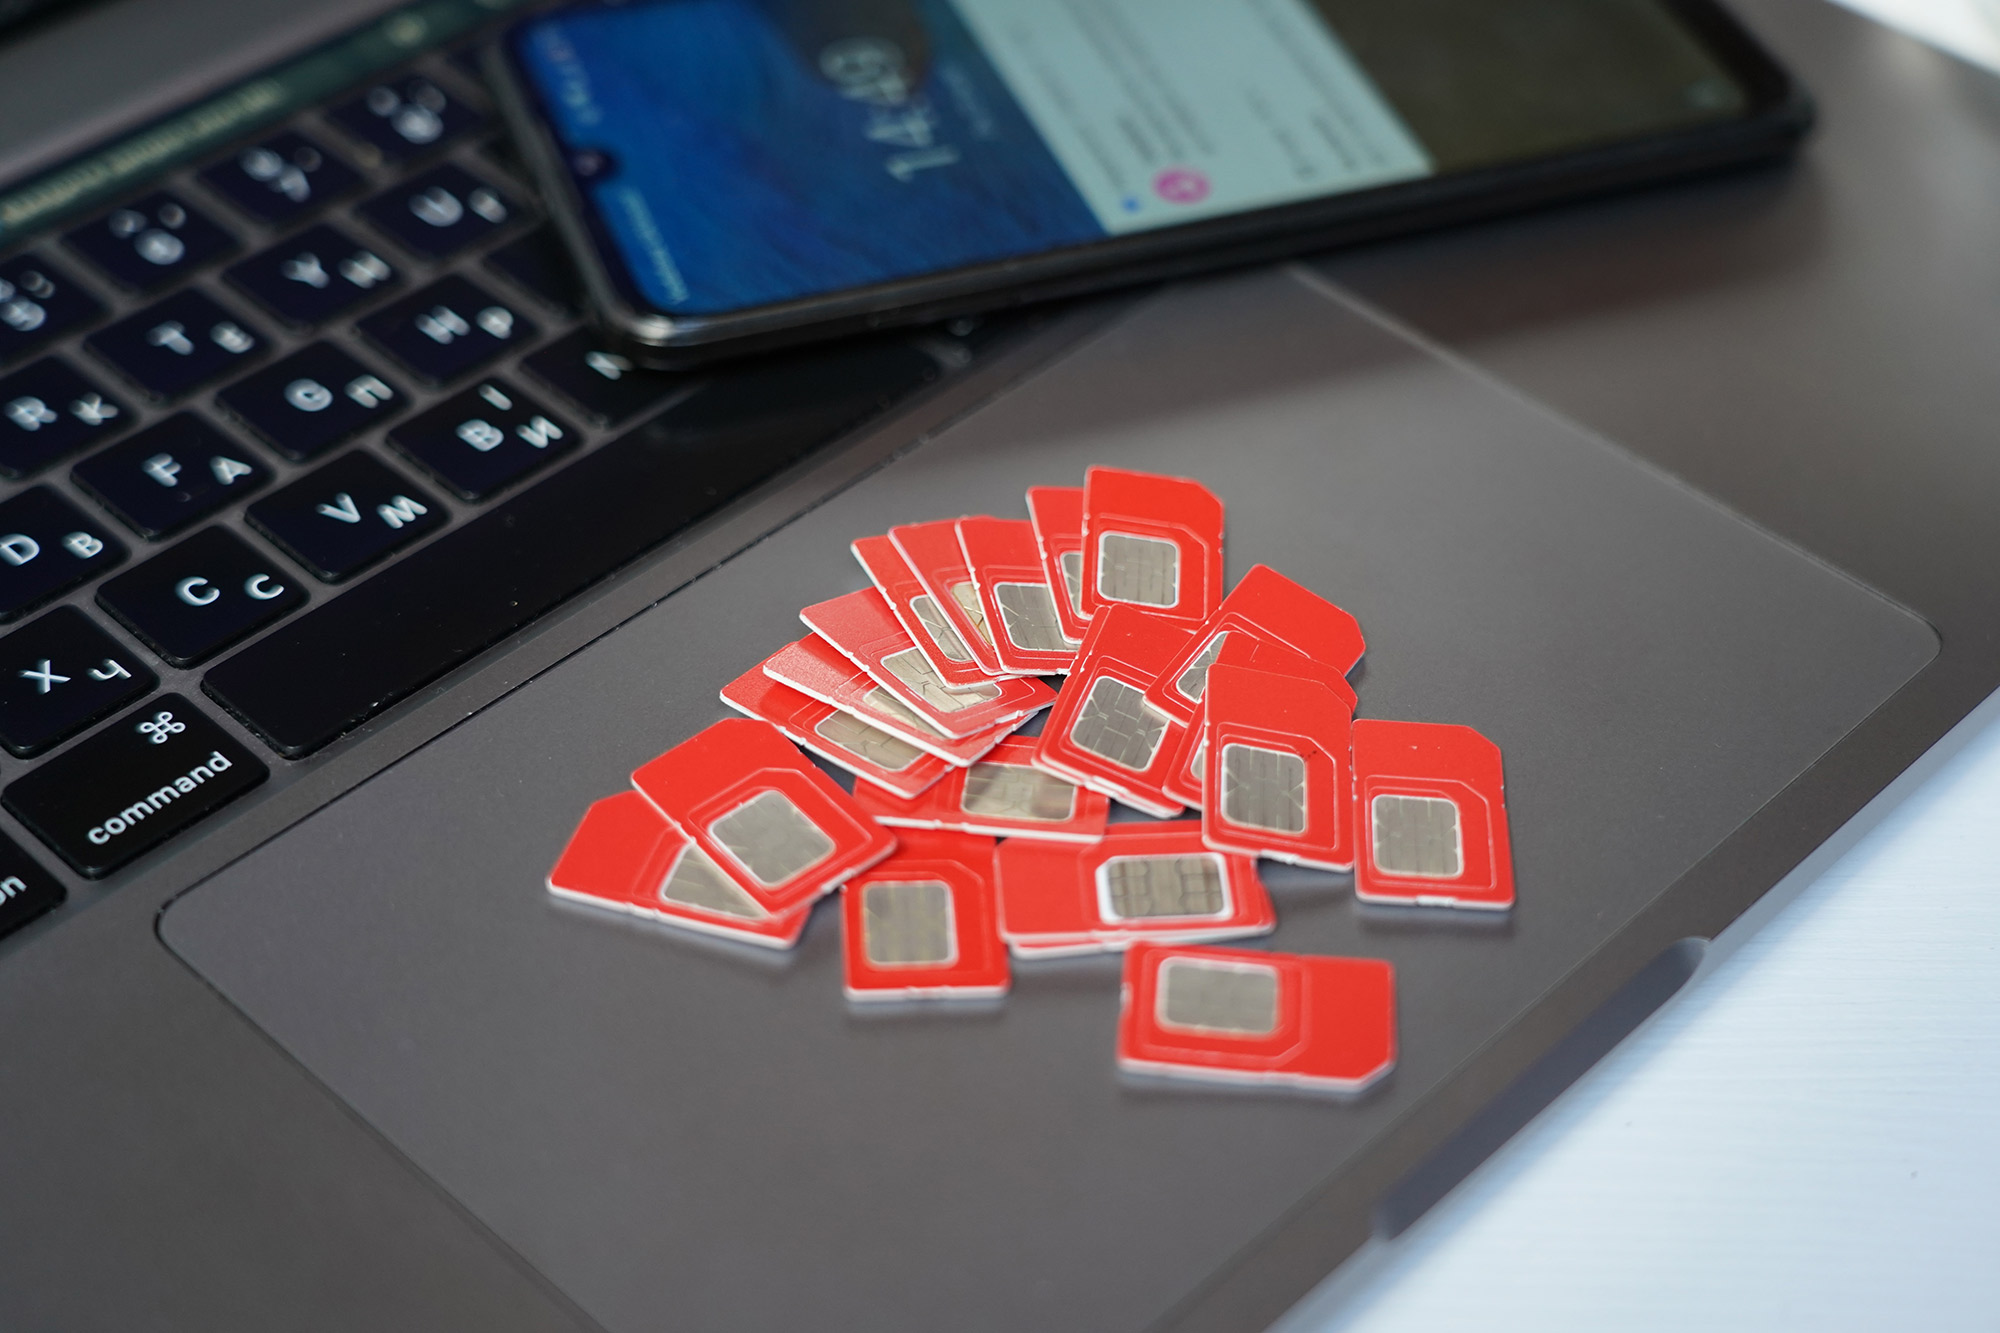 Revector locates one millionth fraudulent SIM card